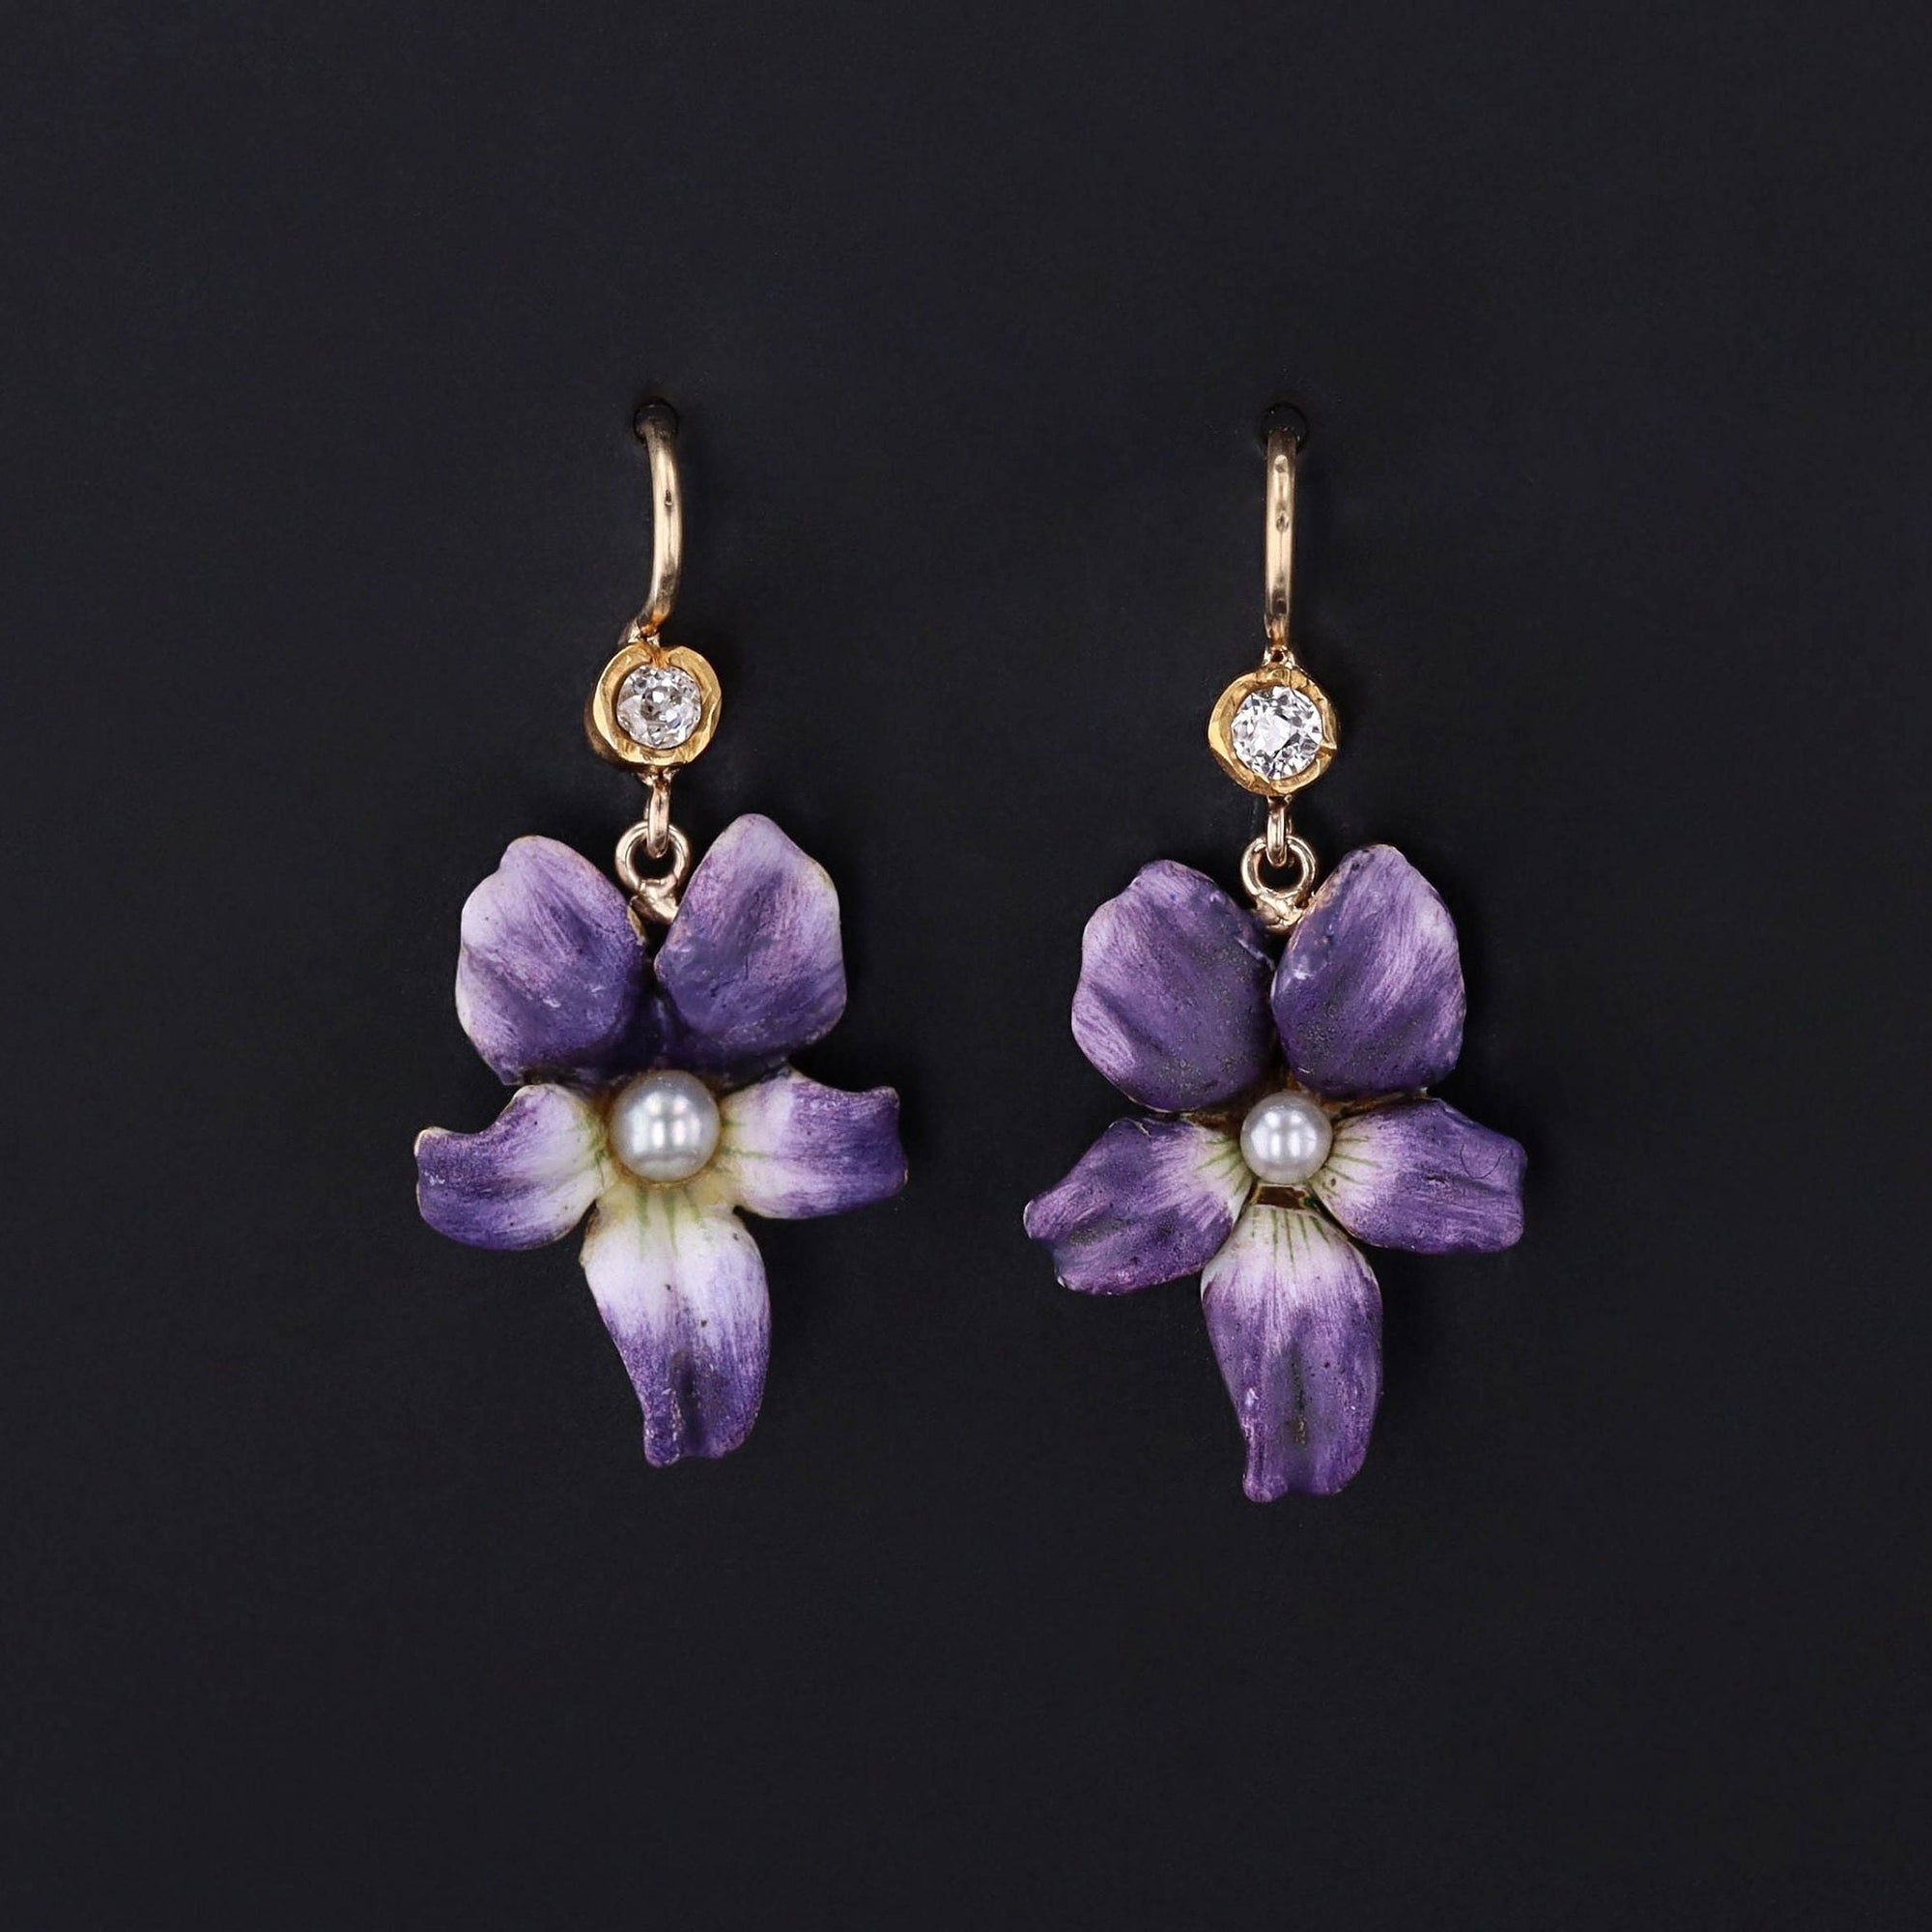 Antique Violet Conversion Earrings of 14k Gold